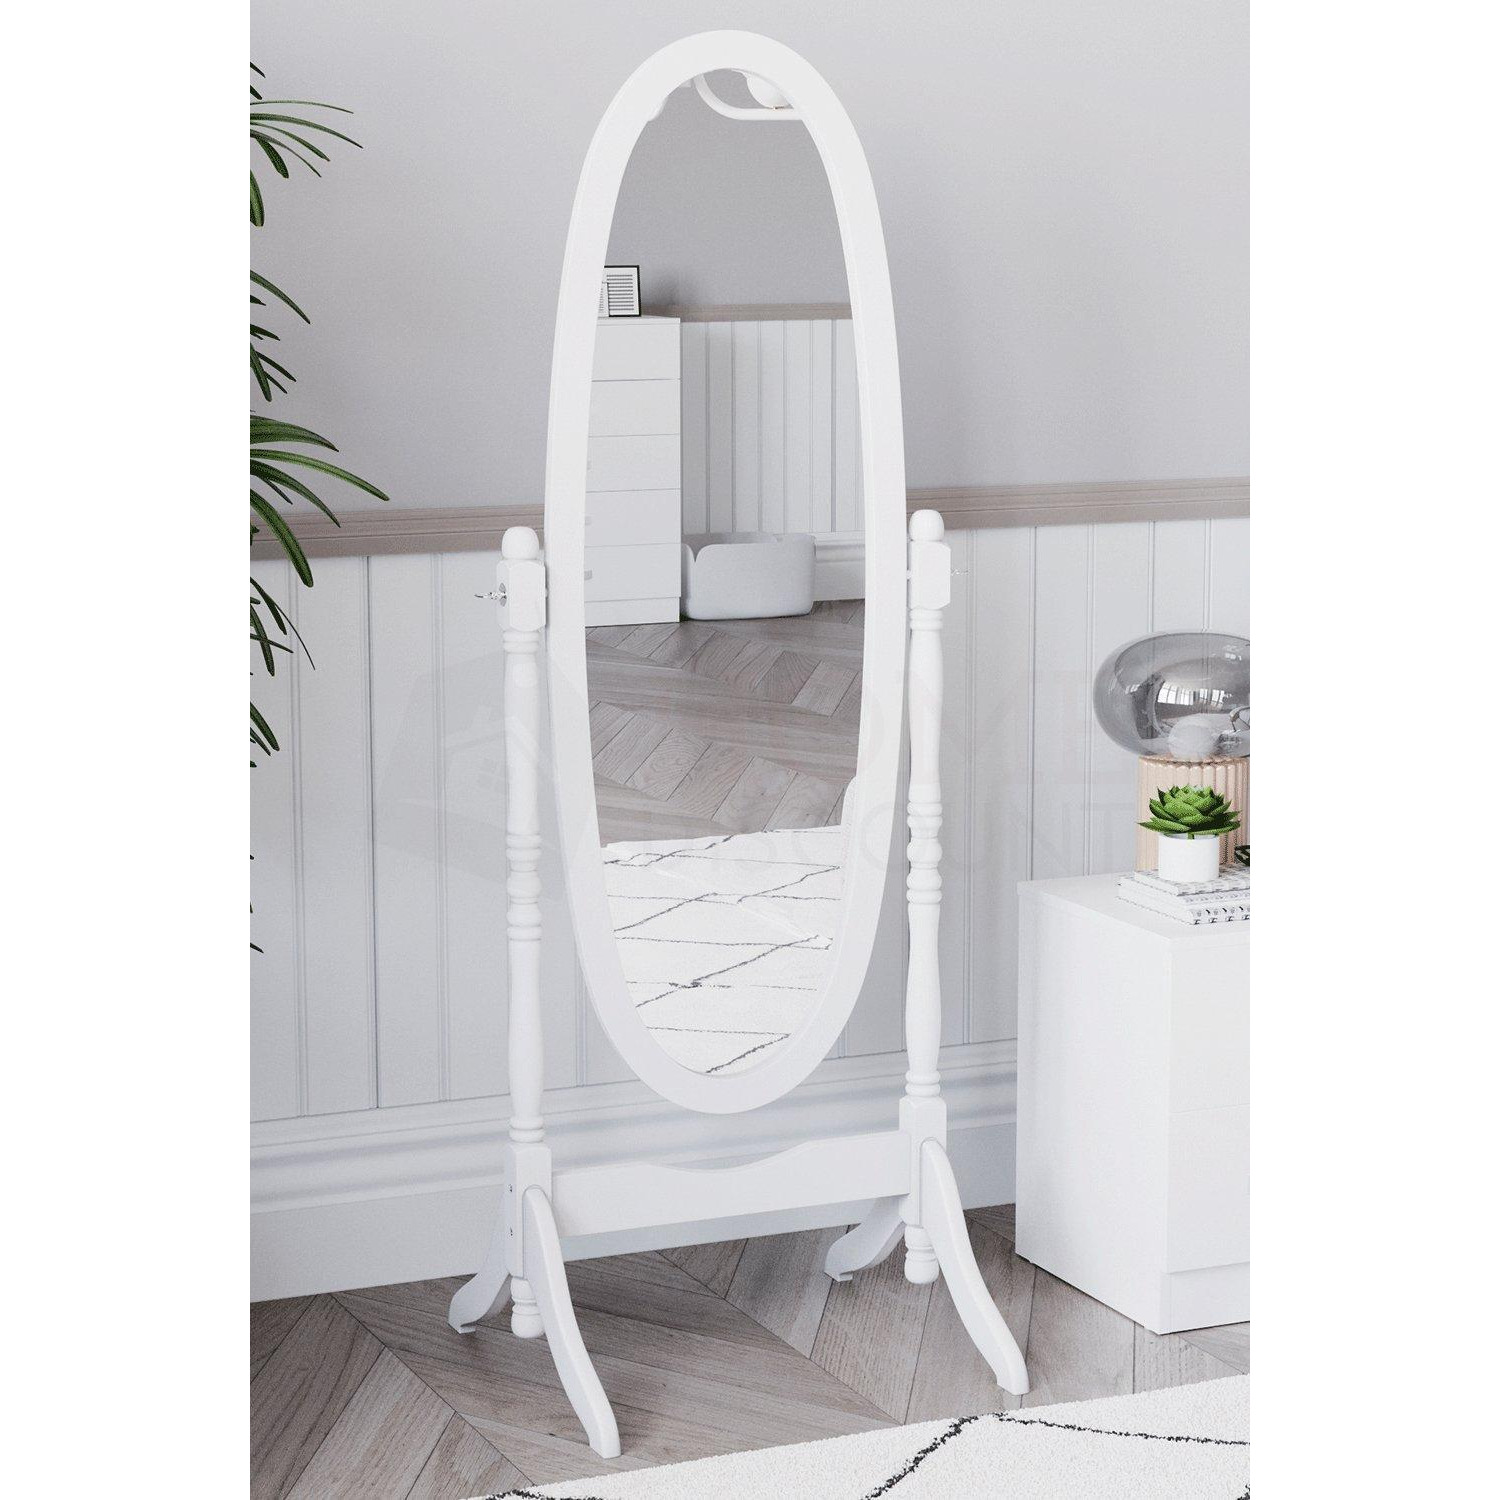 Vida Designs Nishano Oval Cheval Mirror Free Standing Full Length Rotating Frame - image 1